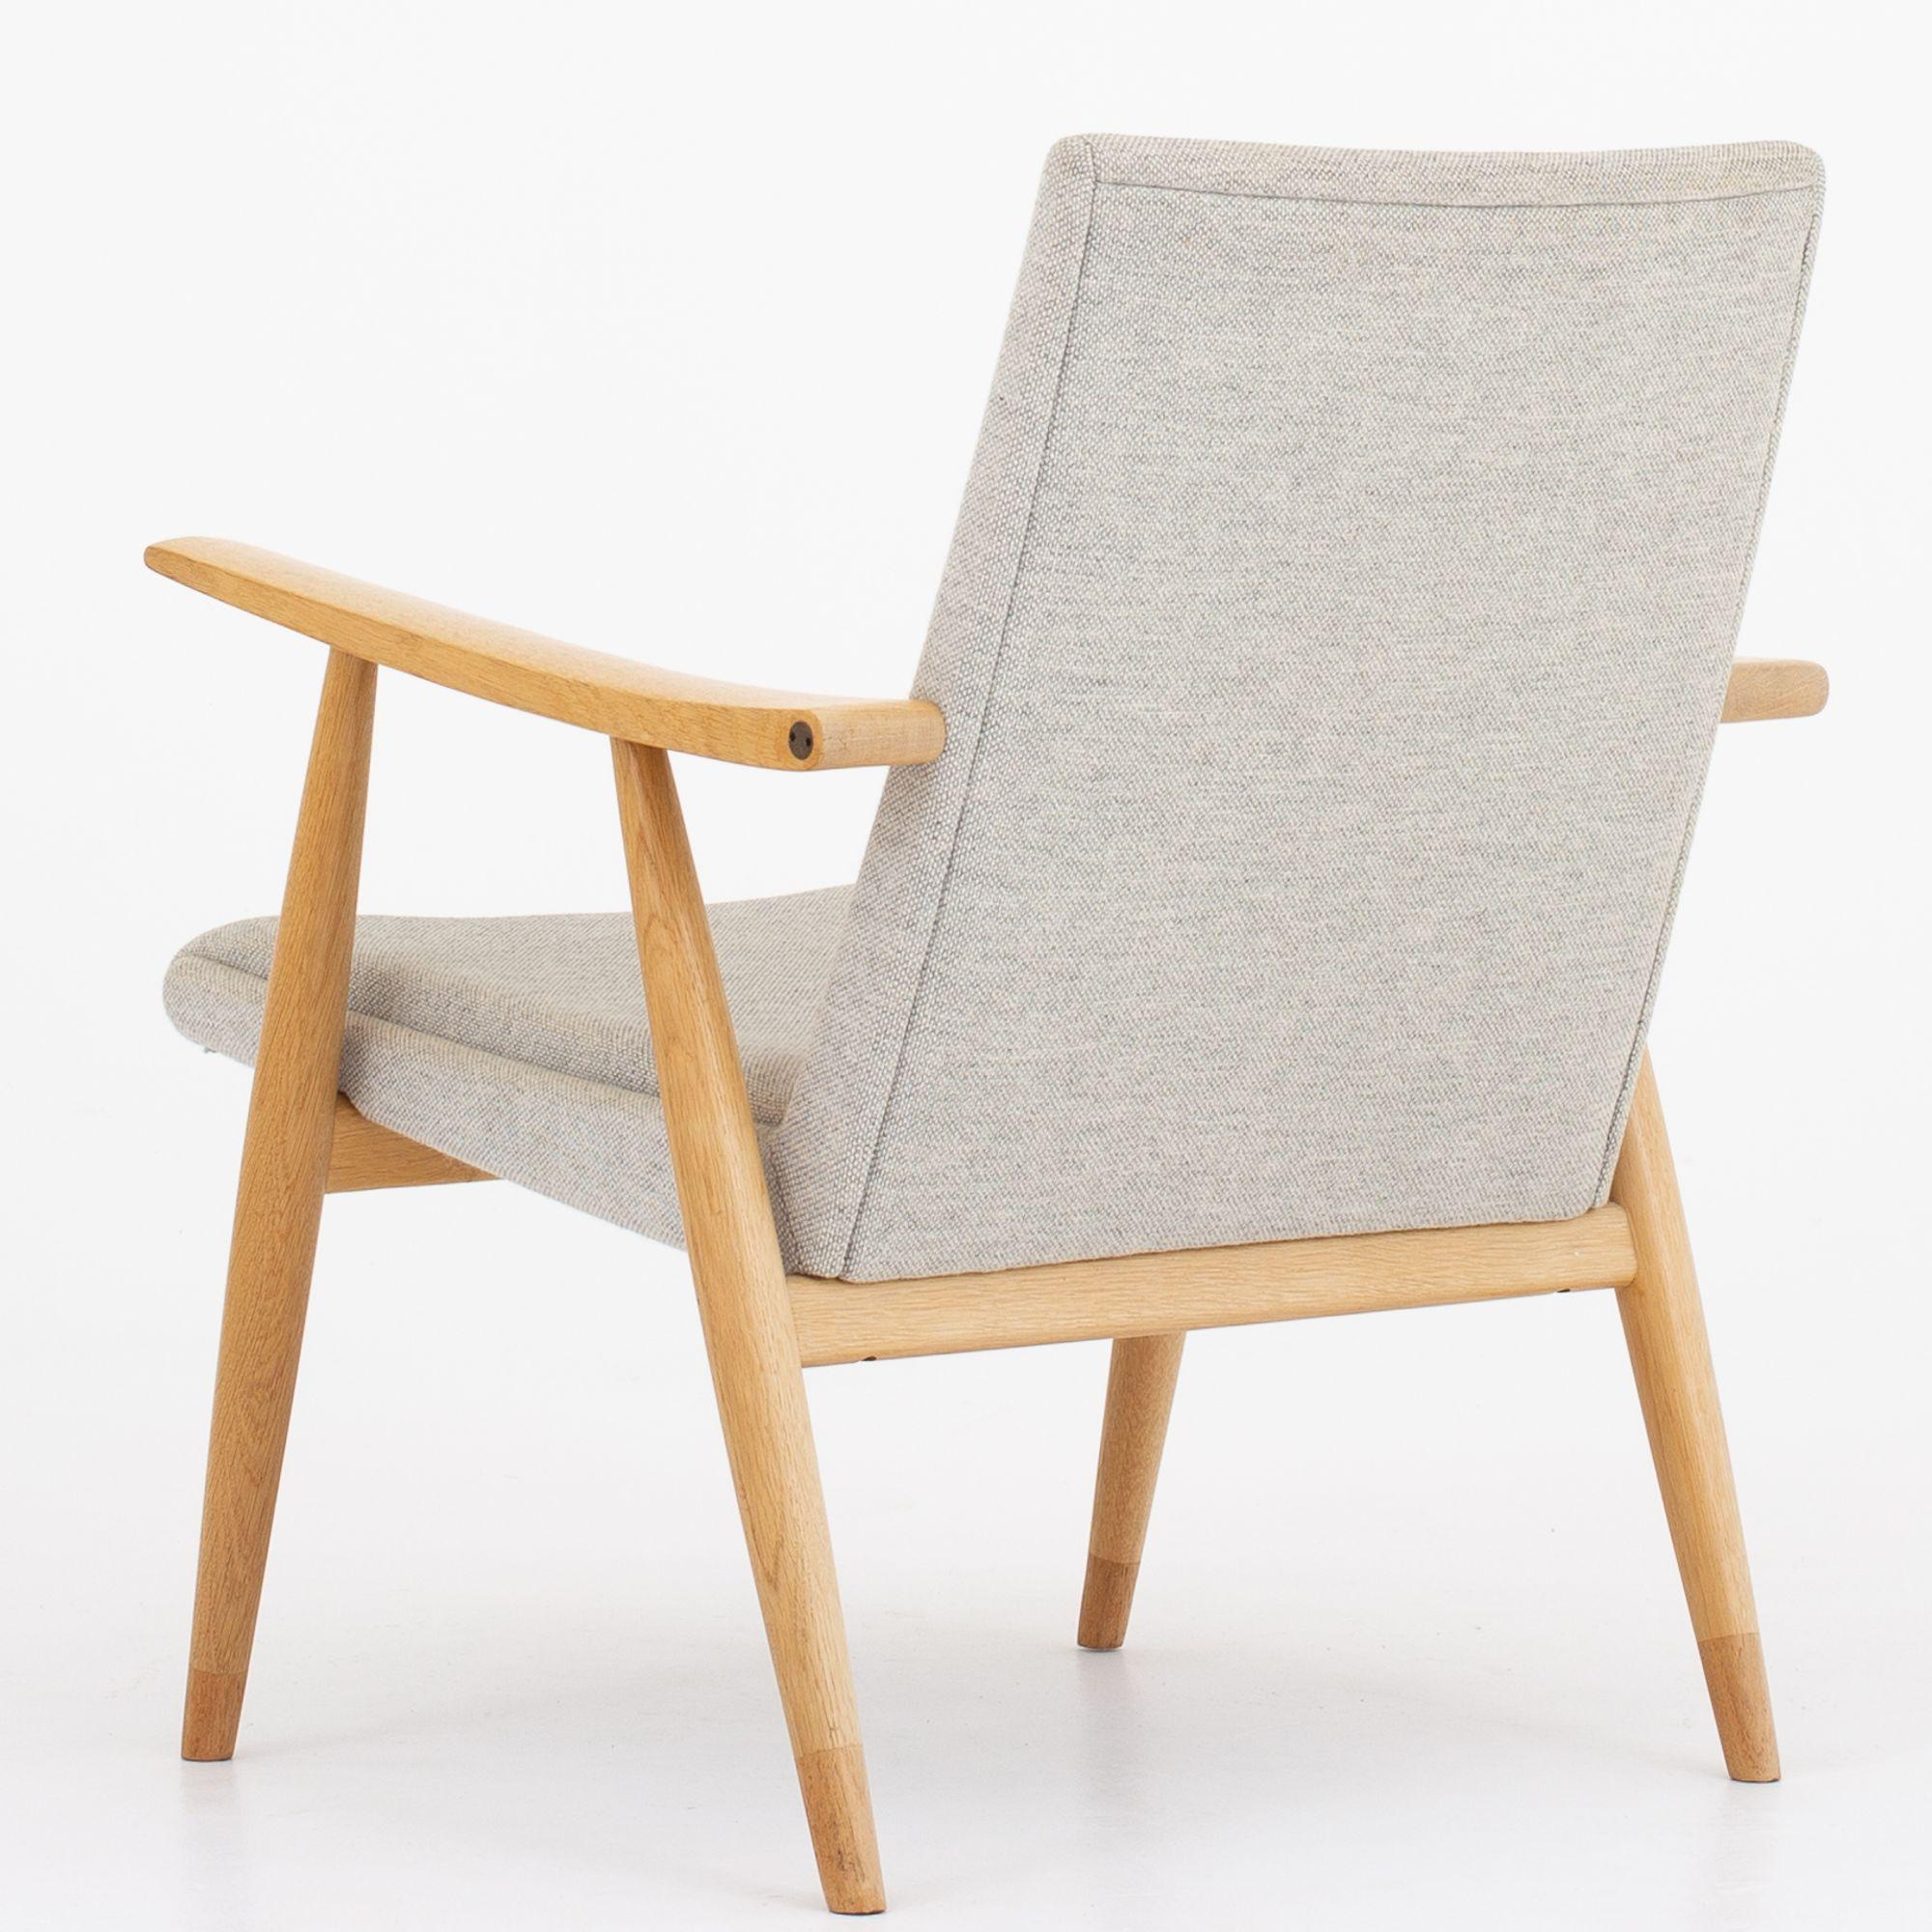 GE 260 - easy chair in oak w. light wool. Hans J. Wegner / Getama.